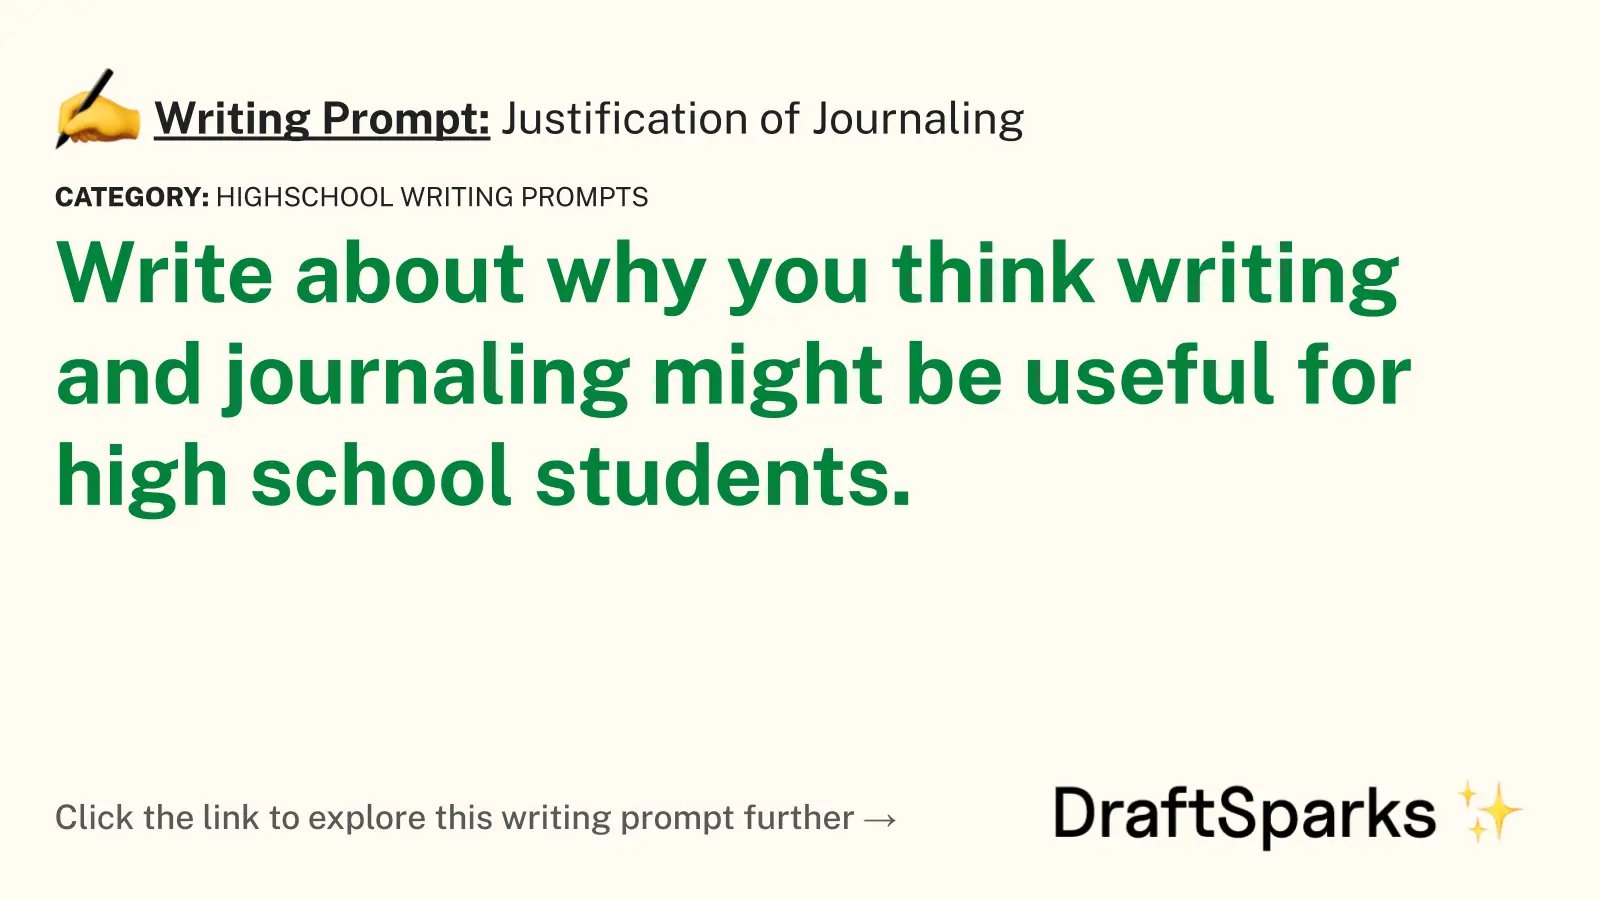 Justification of Journaling